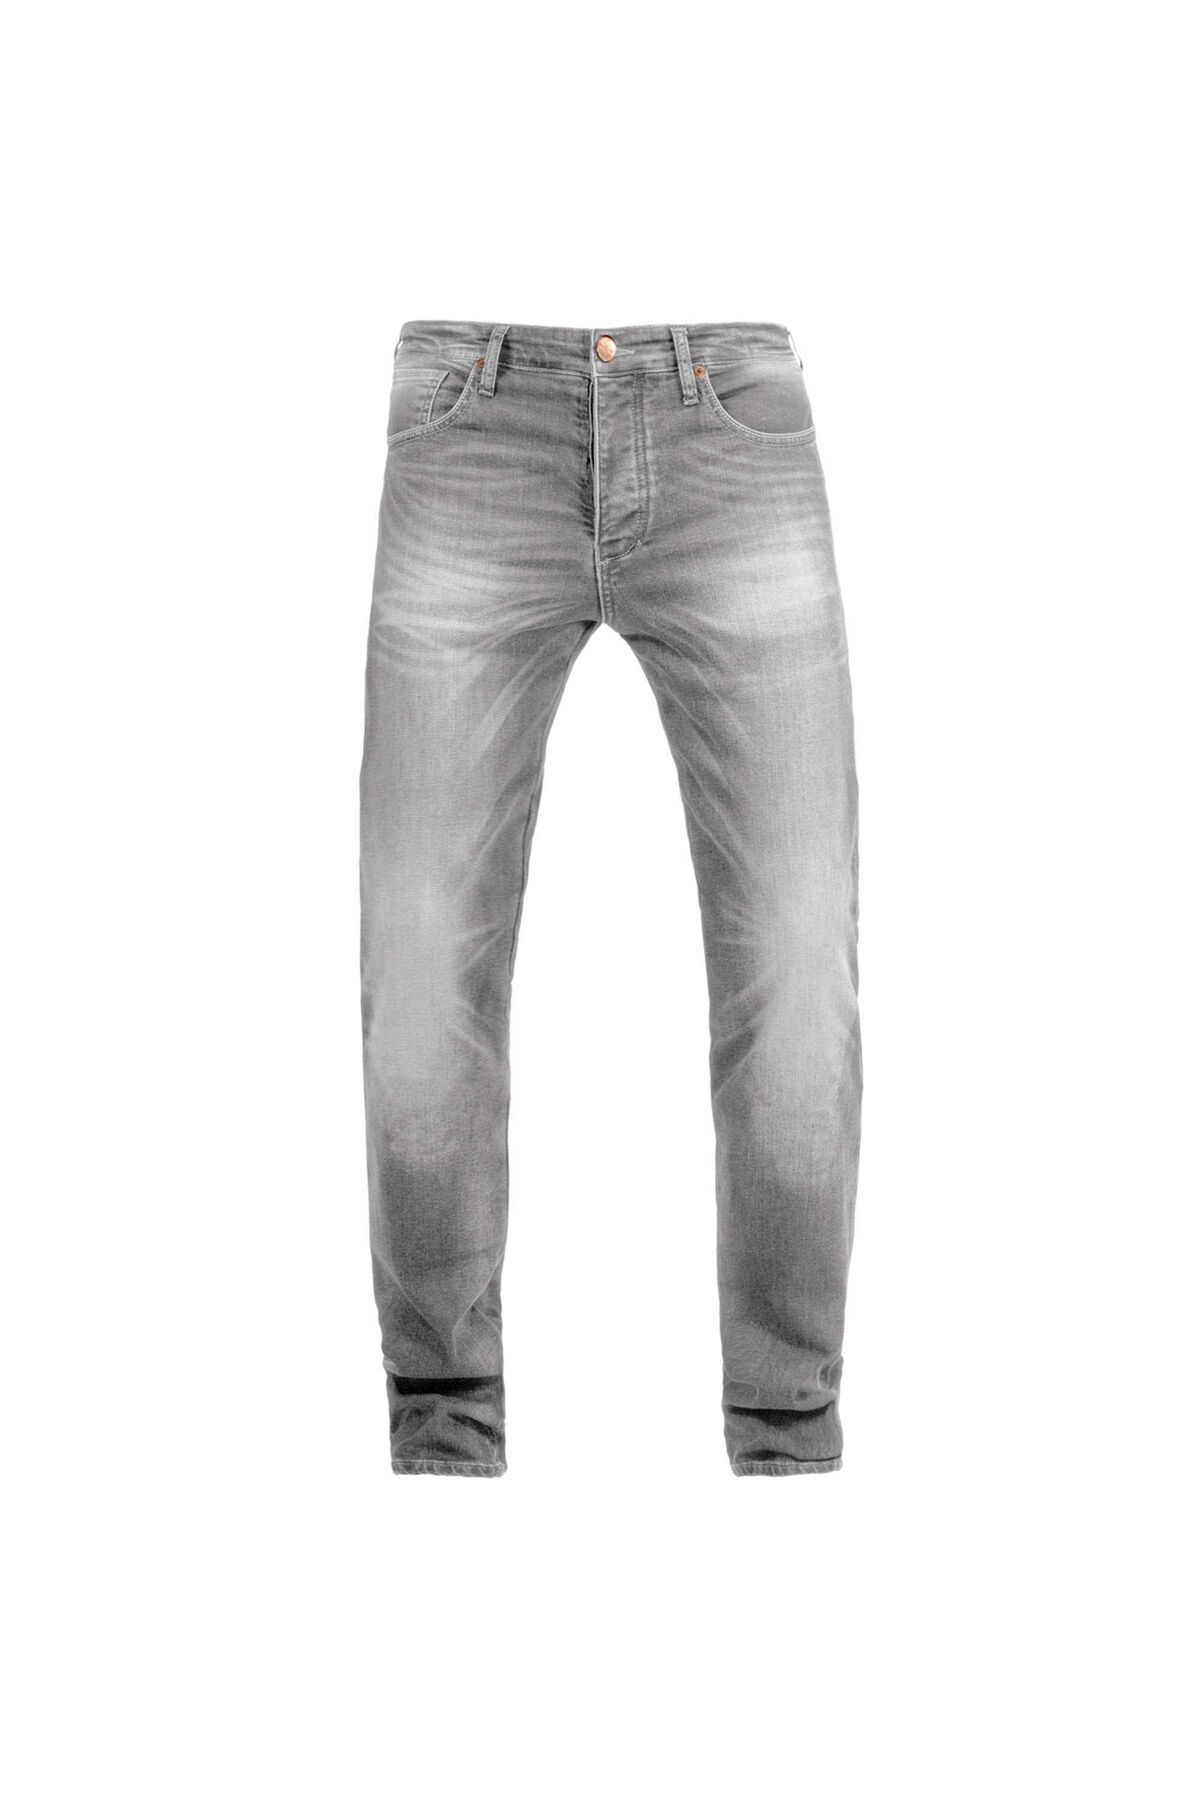 Tech90 Light Grey Kevlar Pantolon John Doe Kevlar Jeans Jdd2023